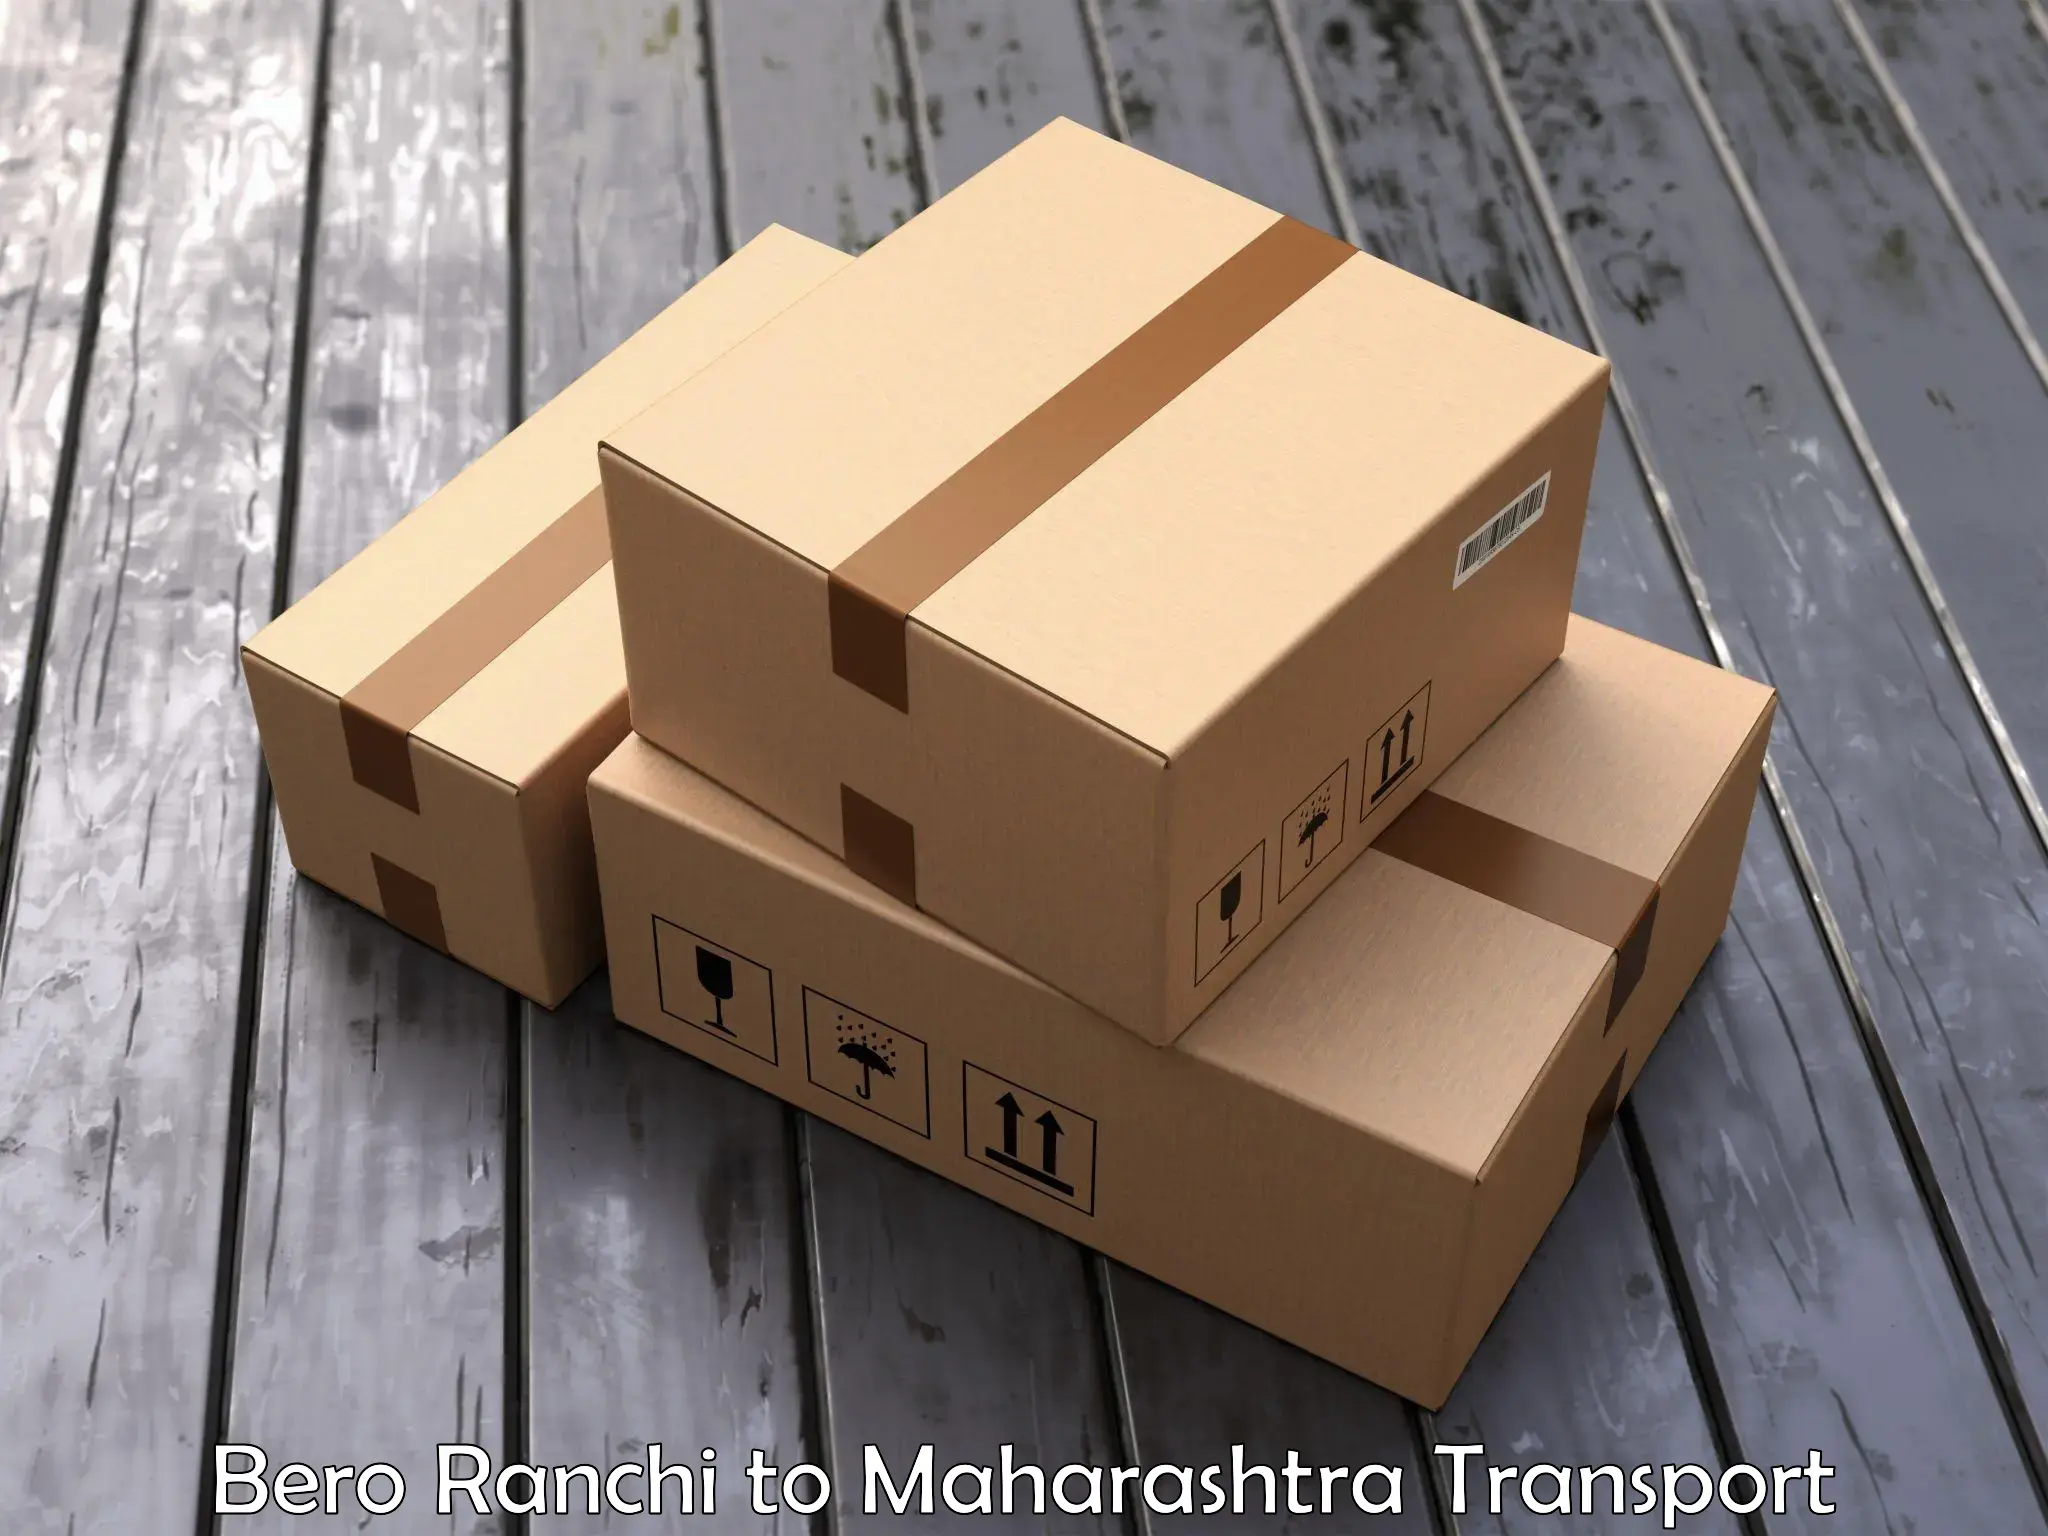 Truck transport companies in India Bero Ranchi to Parbhani